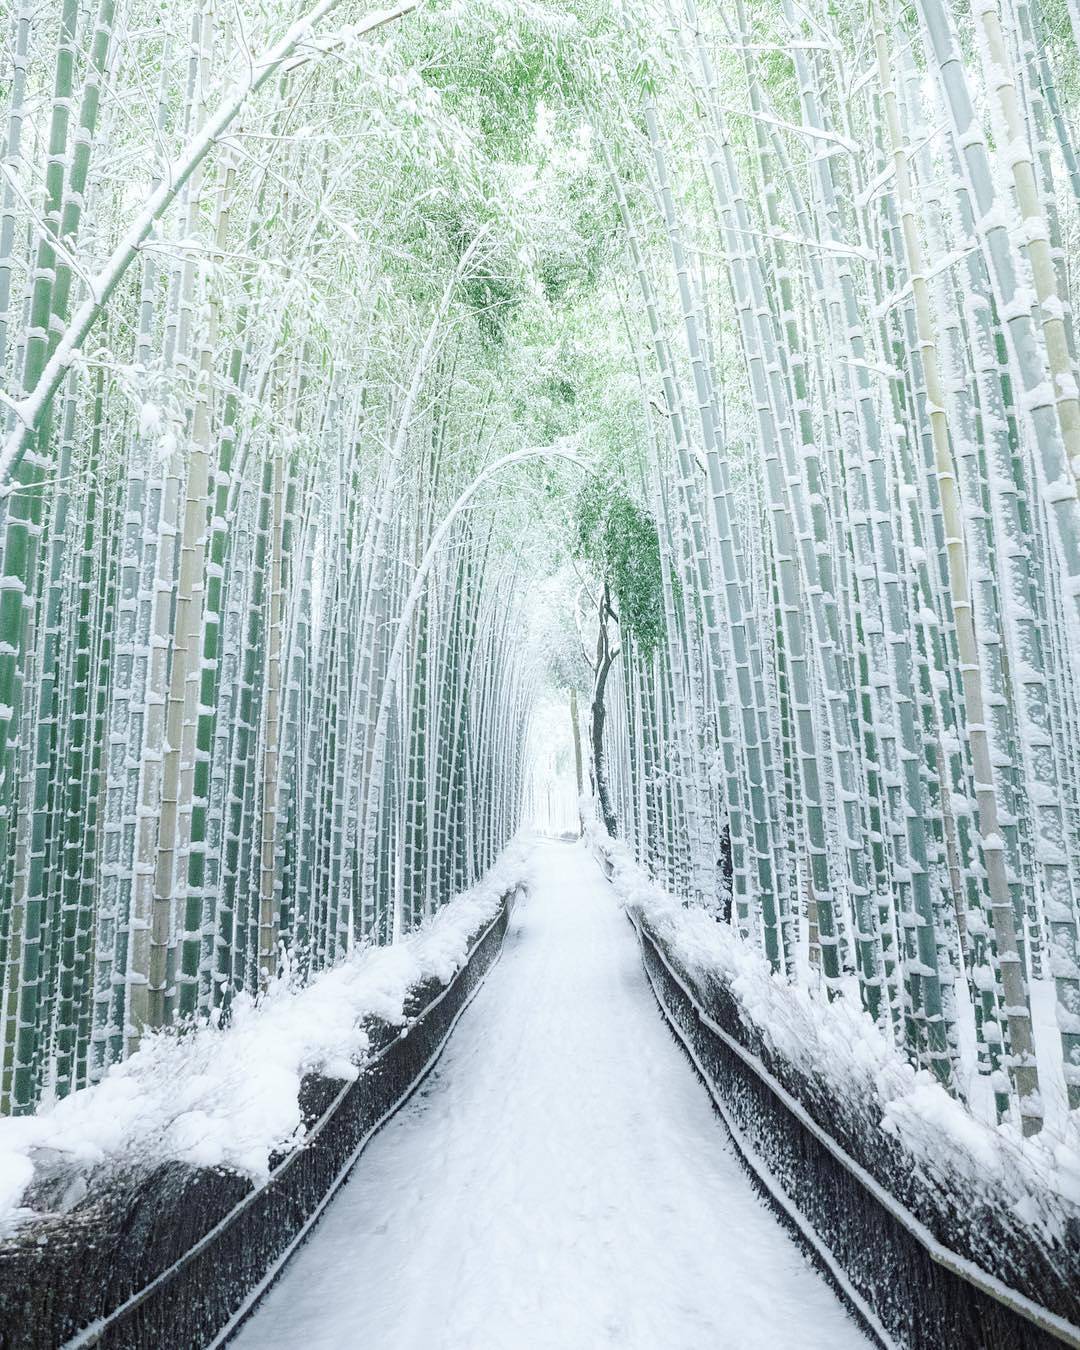 Visit Japan Kyotos Arashiyama Bamboo Forest As Youve Never Seen It